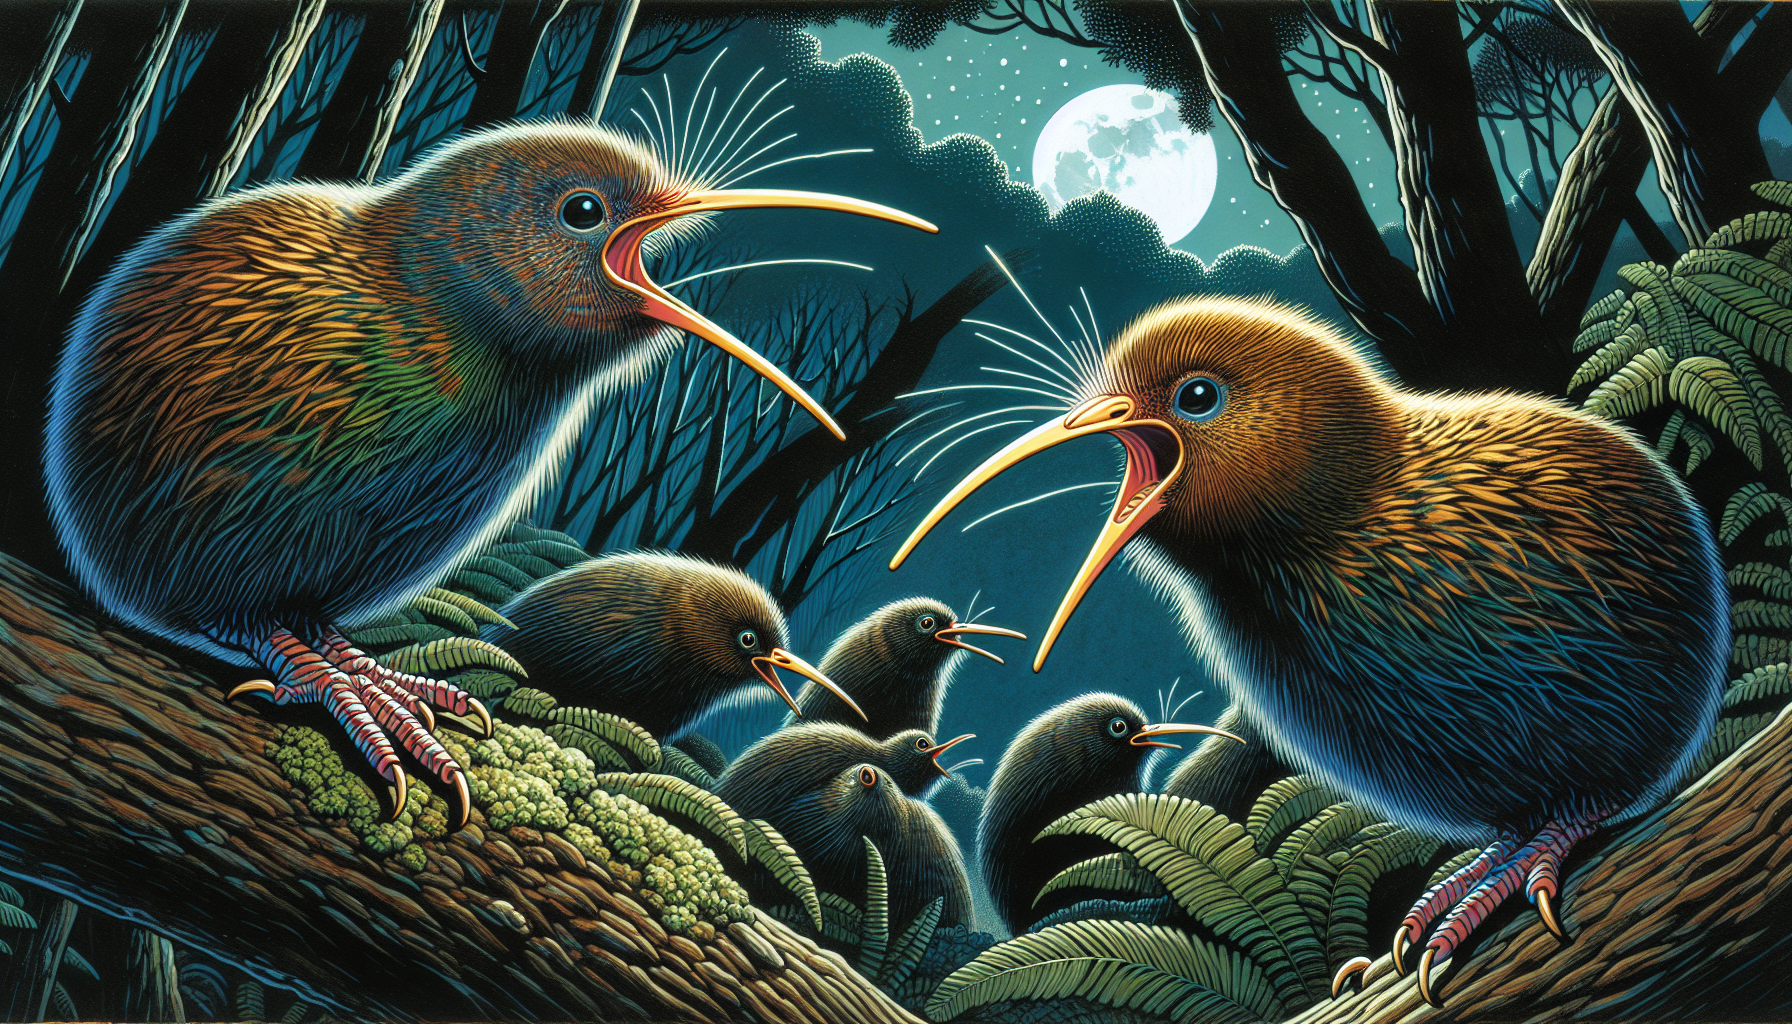 Illustration of two kiwi birds communicating through gender-specific calls